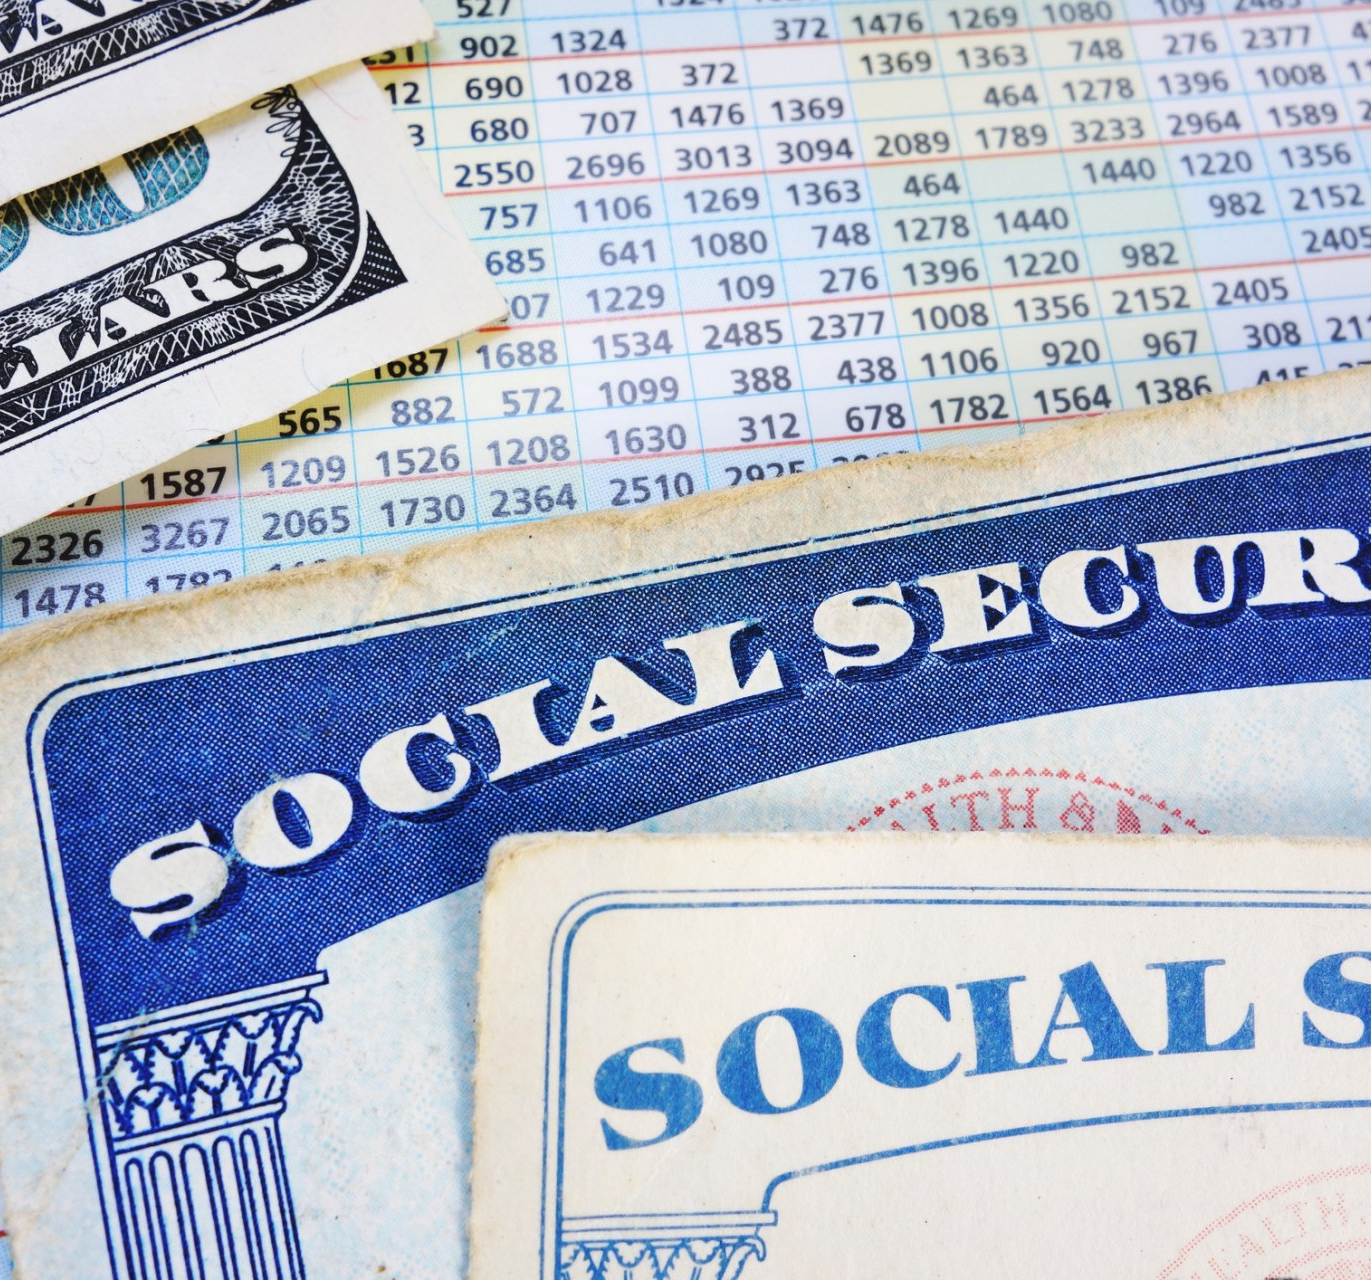 Social Security Cards and 100 Dollar Bills